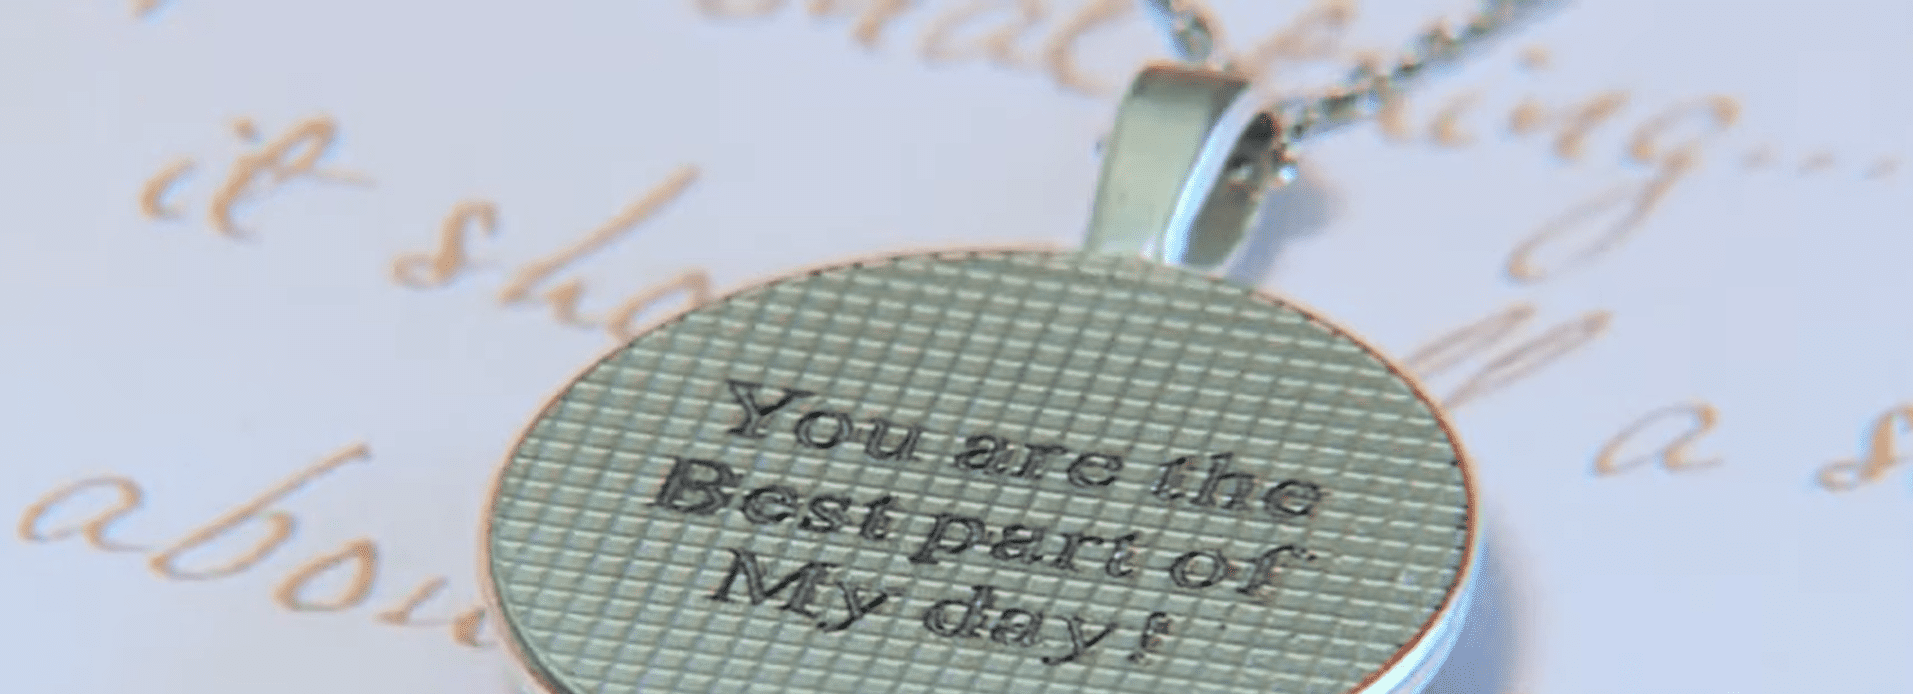 The medallion Elbert Berry made for Emma Grace.│Source: youtube.com/WVTM13News